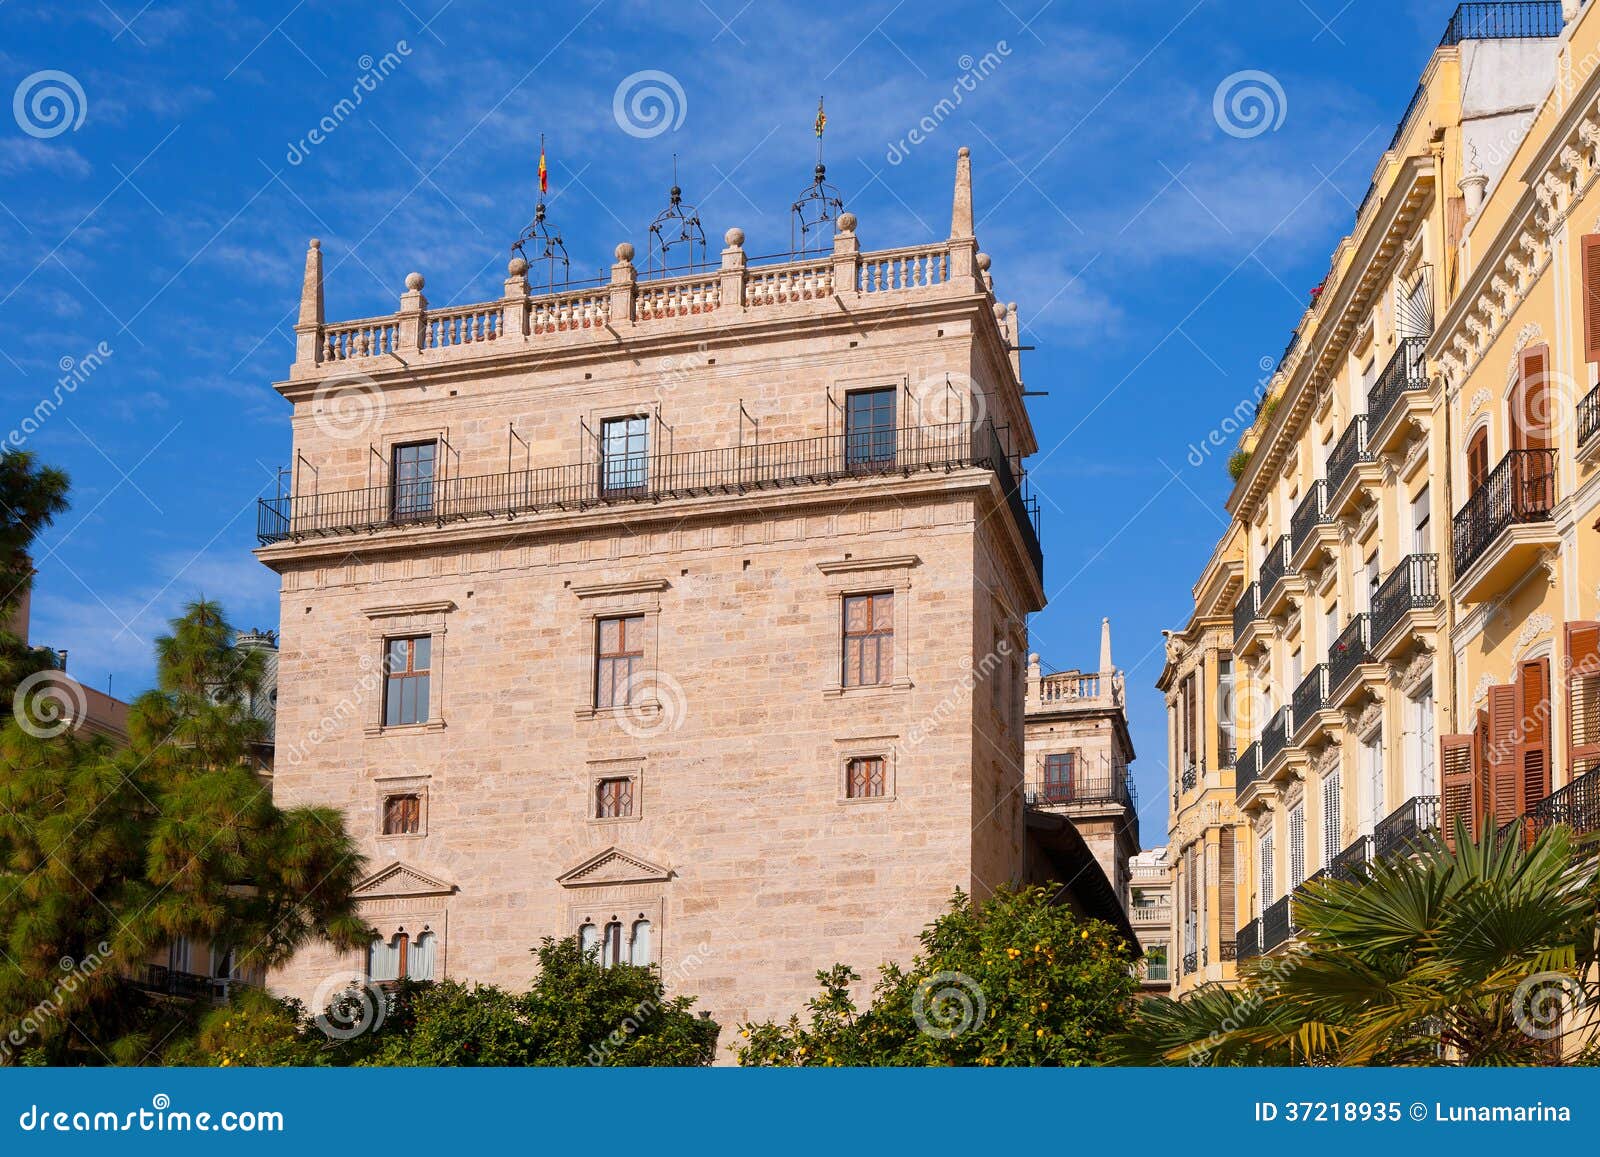 palau de la generalitat valenciana palace in valencia